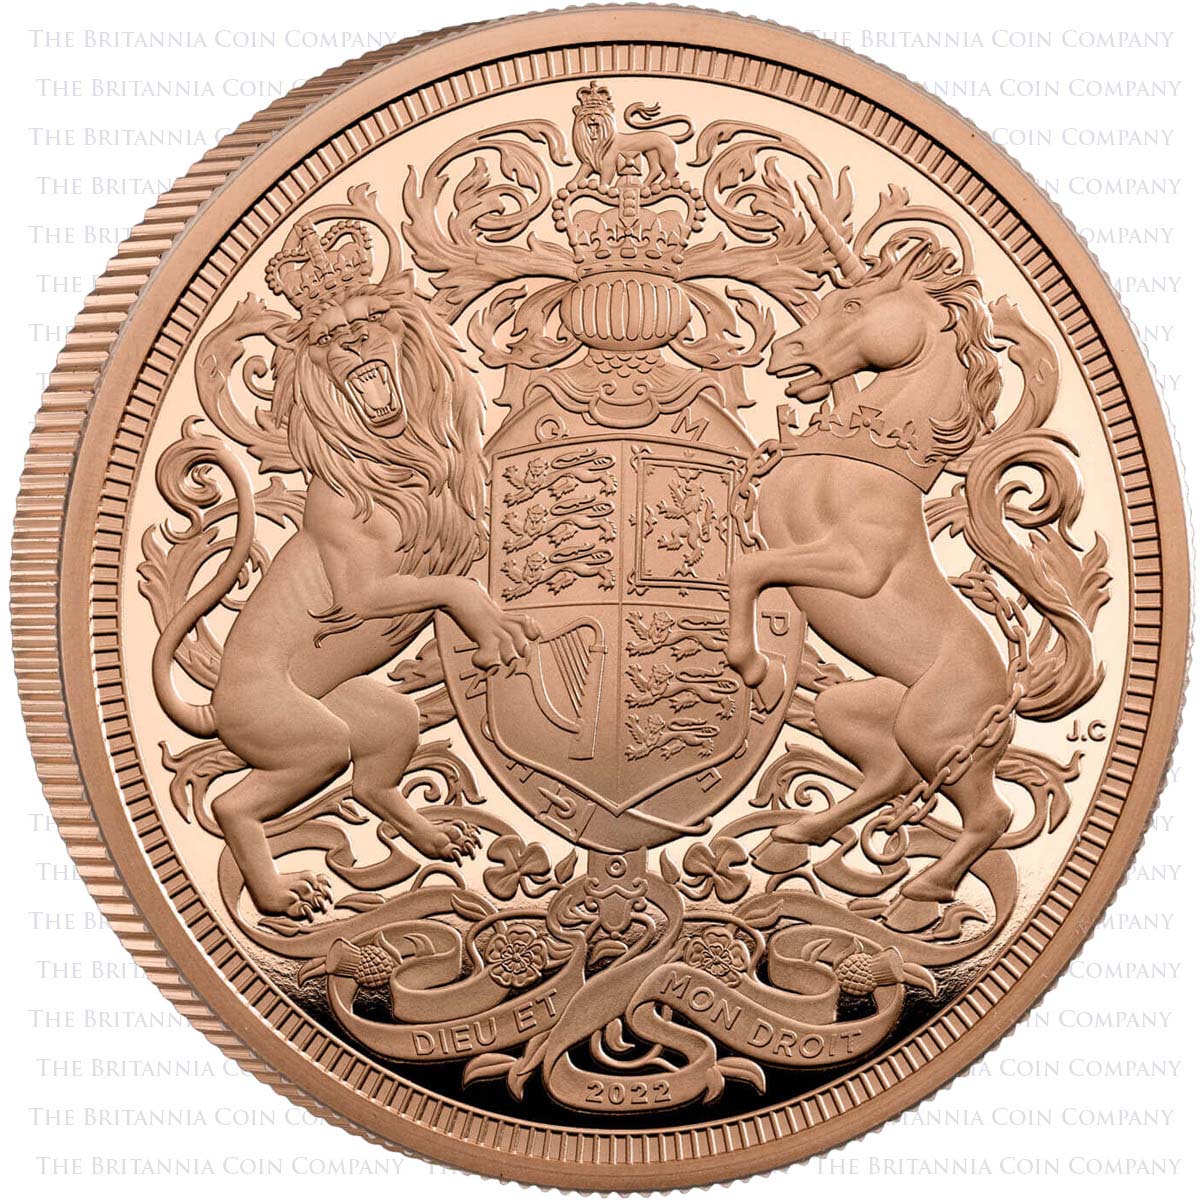 MA22 2022 Charles III Gold Brilliant Uncirculated Five Sovereign Queen Elizabeth II Memorial Reverse